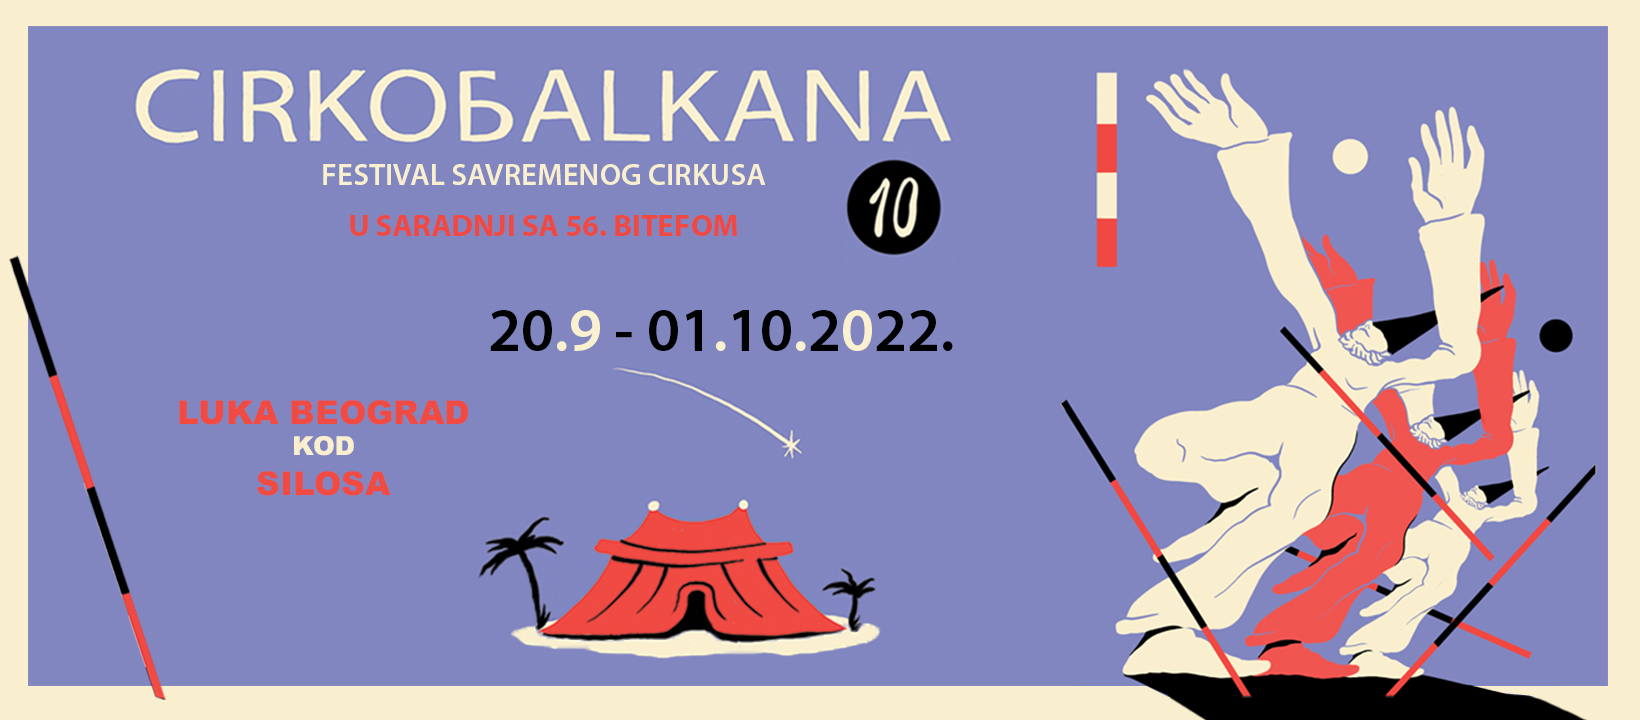 "CirkoBalkana 10" festival savremenog cirkusa